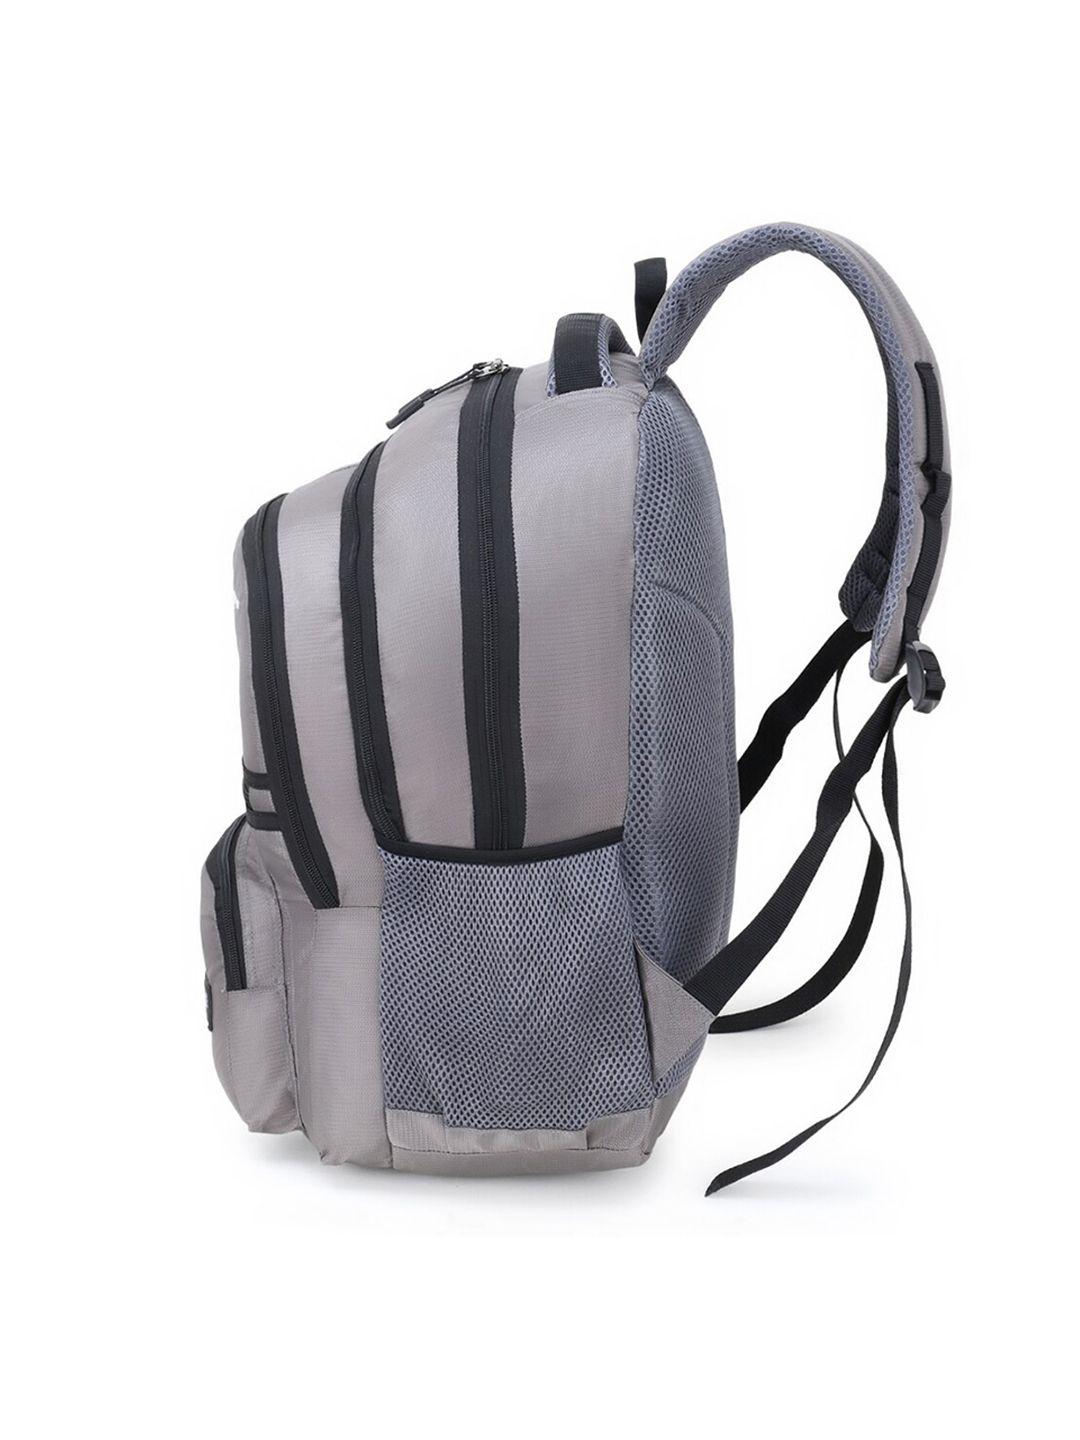 lookmuster unisex grey & black colourblocked backpack